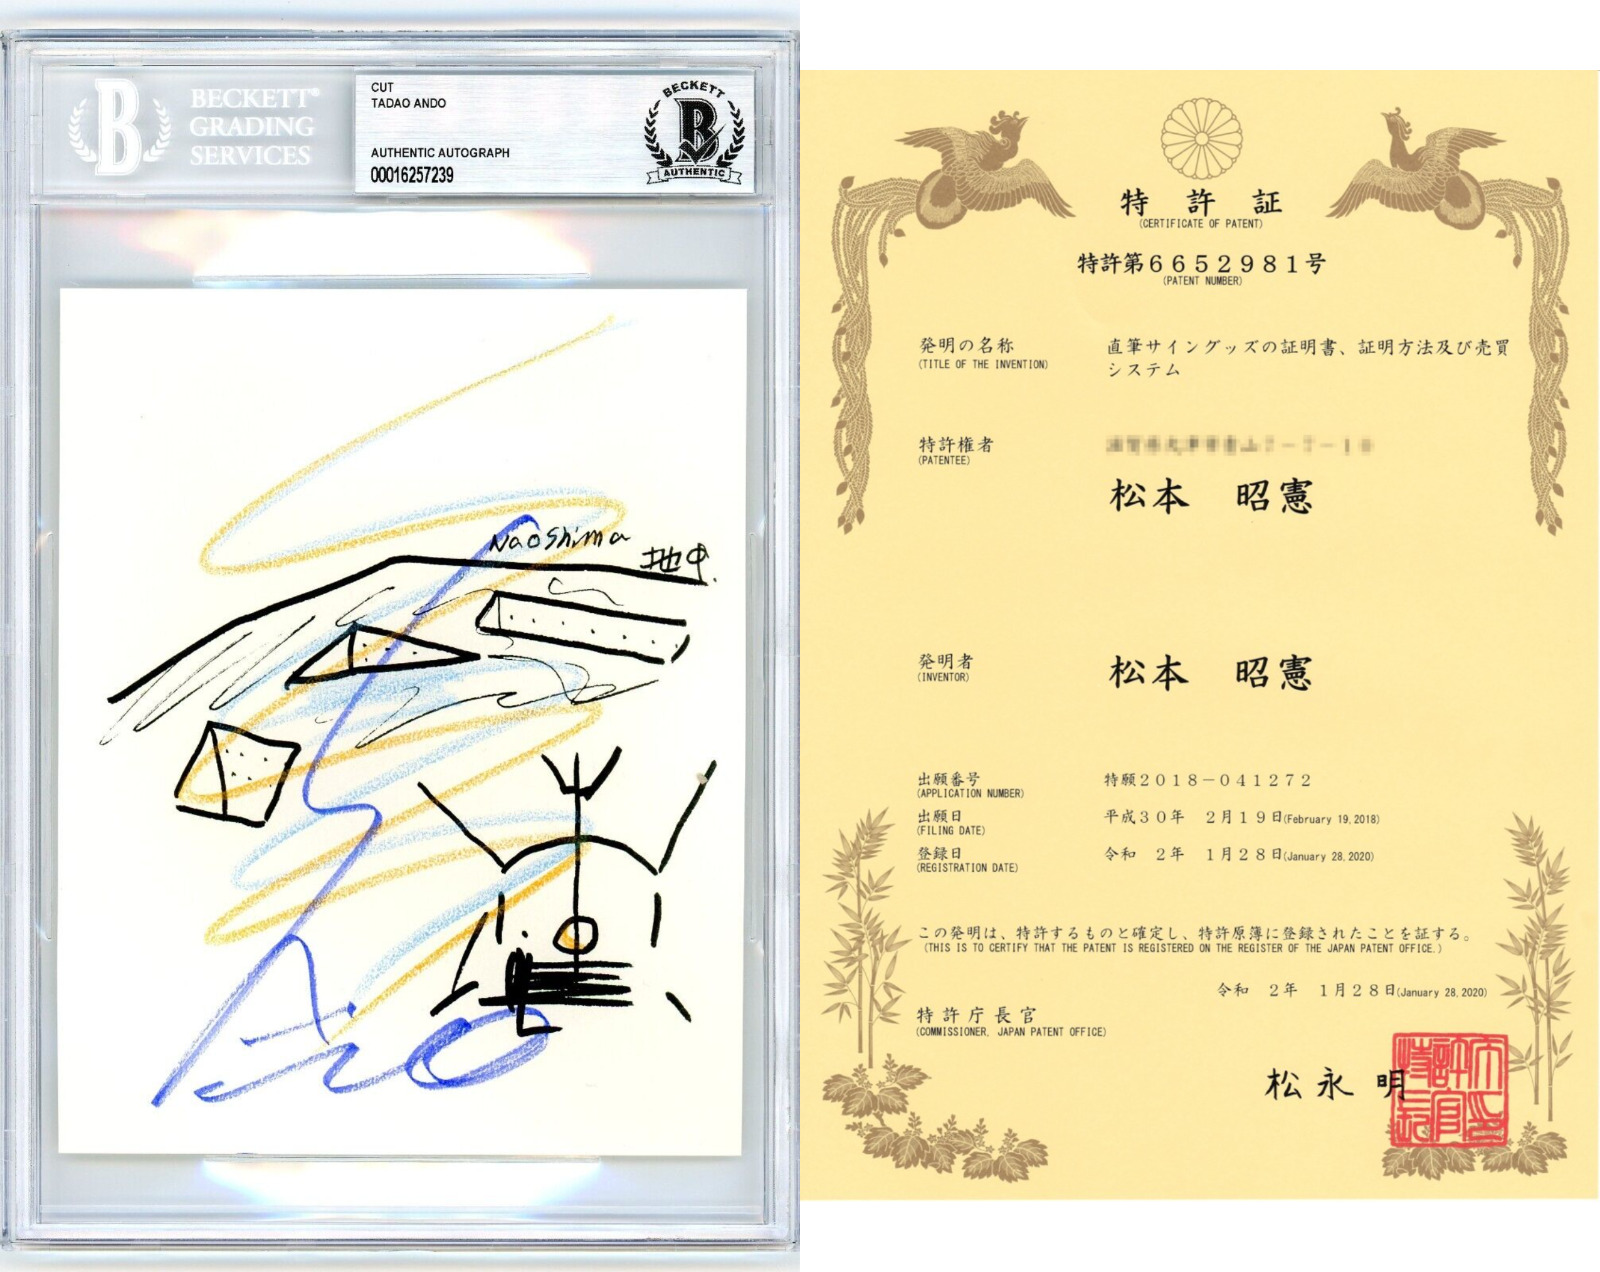 Tadao Ando Signed & Sketch Naoshima Card Holder Authenticated by Beckett